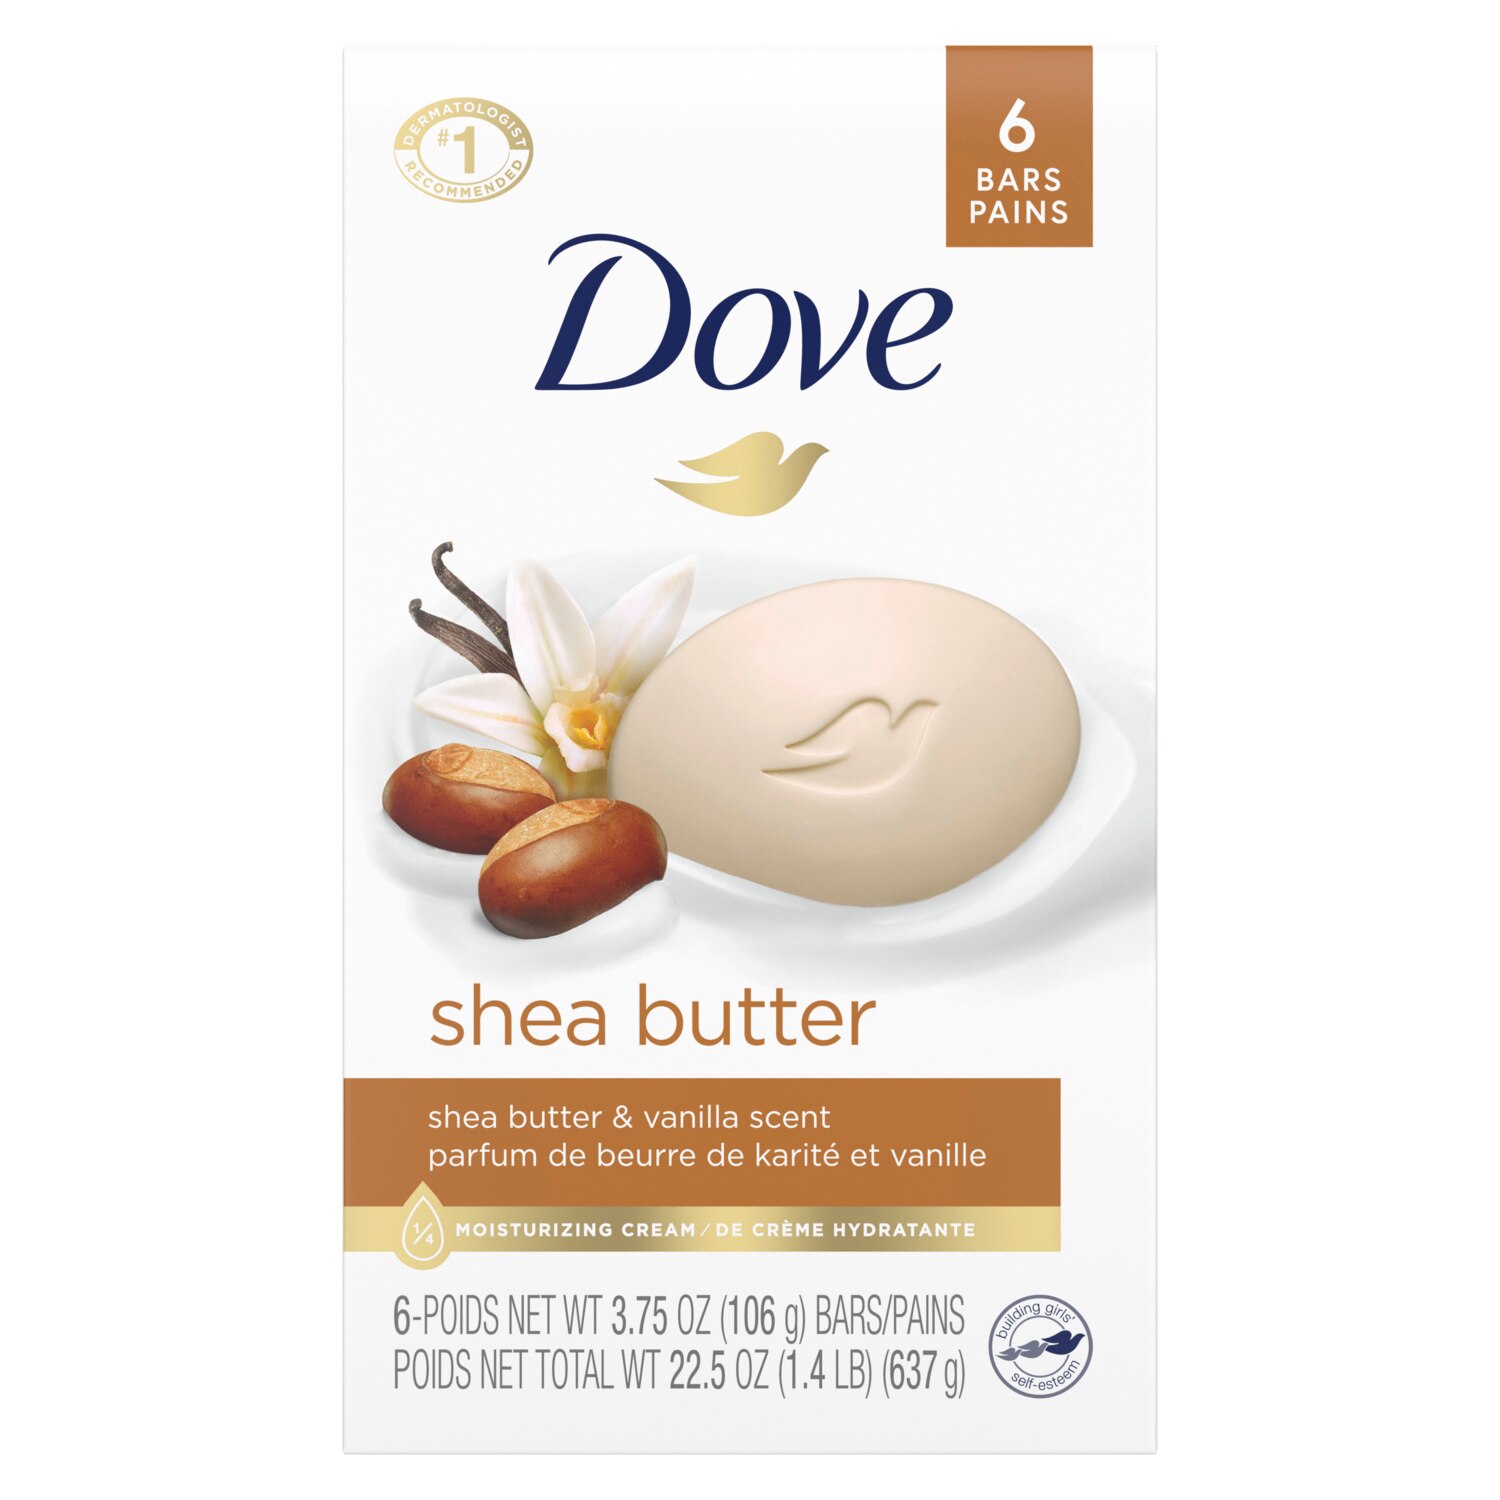 Dove Purely Pampering More Moisturizing Than Bar Soap Shea Butter Beauty Bar For Softer Skin, 3.75 OZ, 6 Bars , CVS